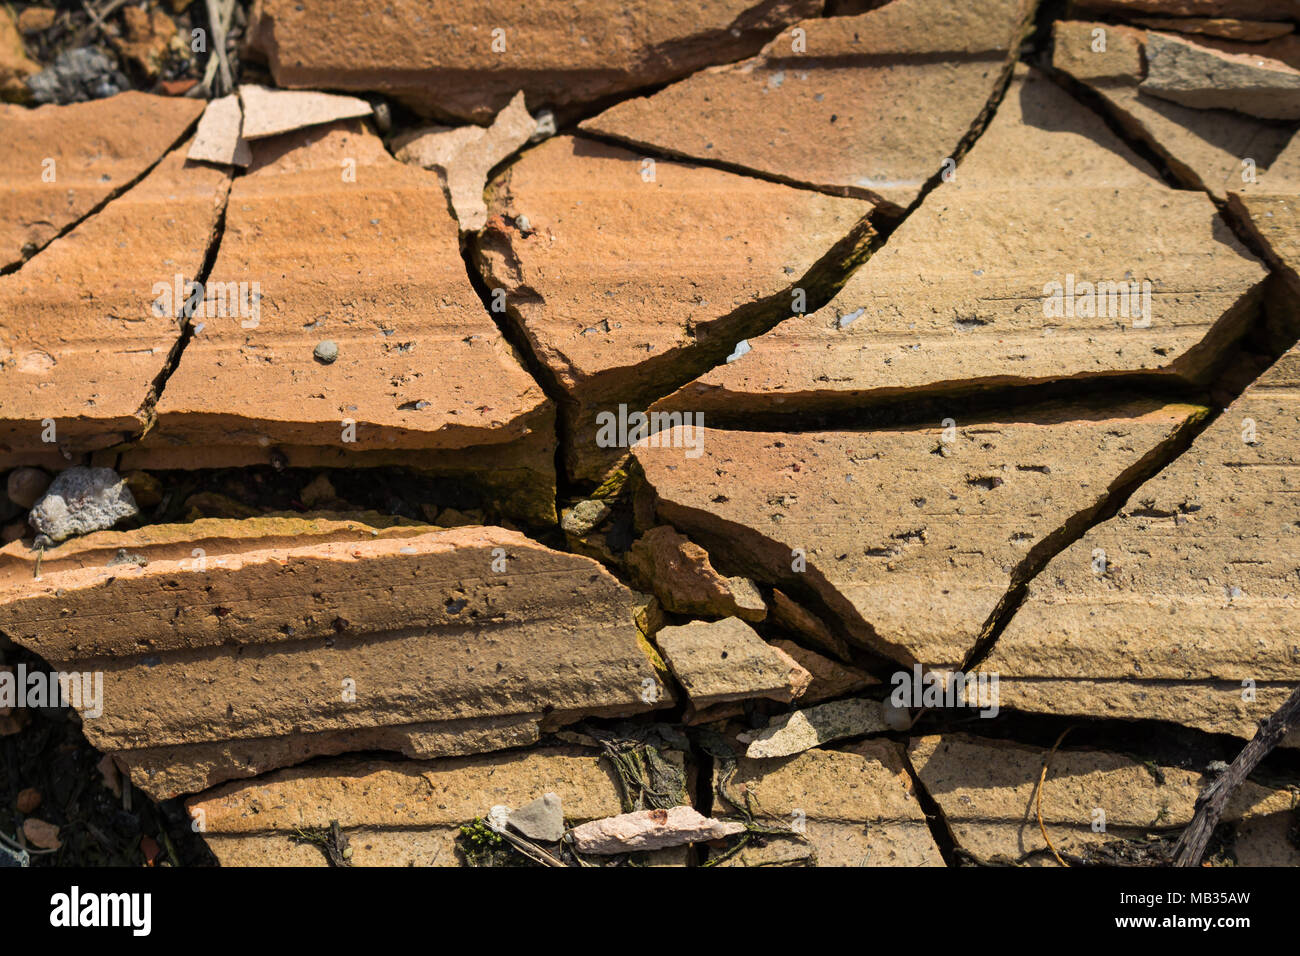 Detail of an orange broken brick in the sunlight at a junkyard. Stock Photo